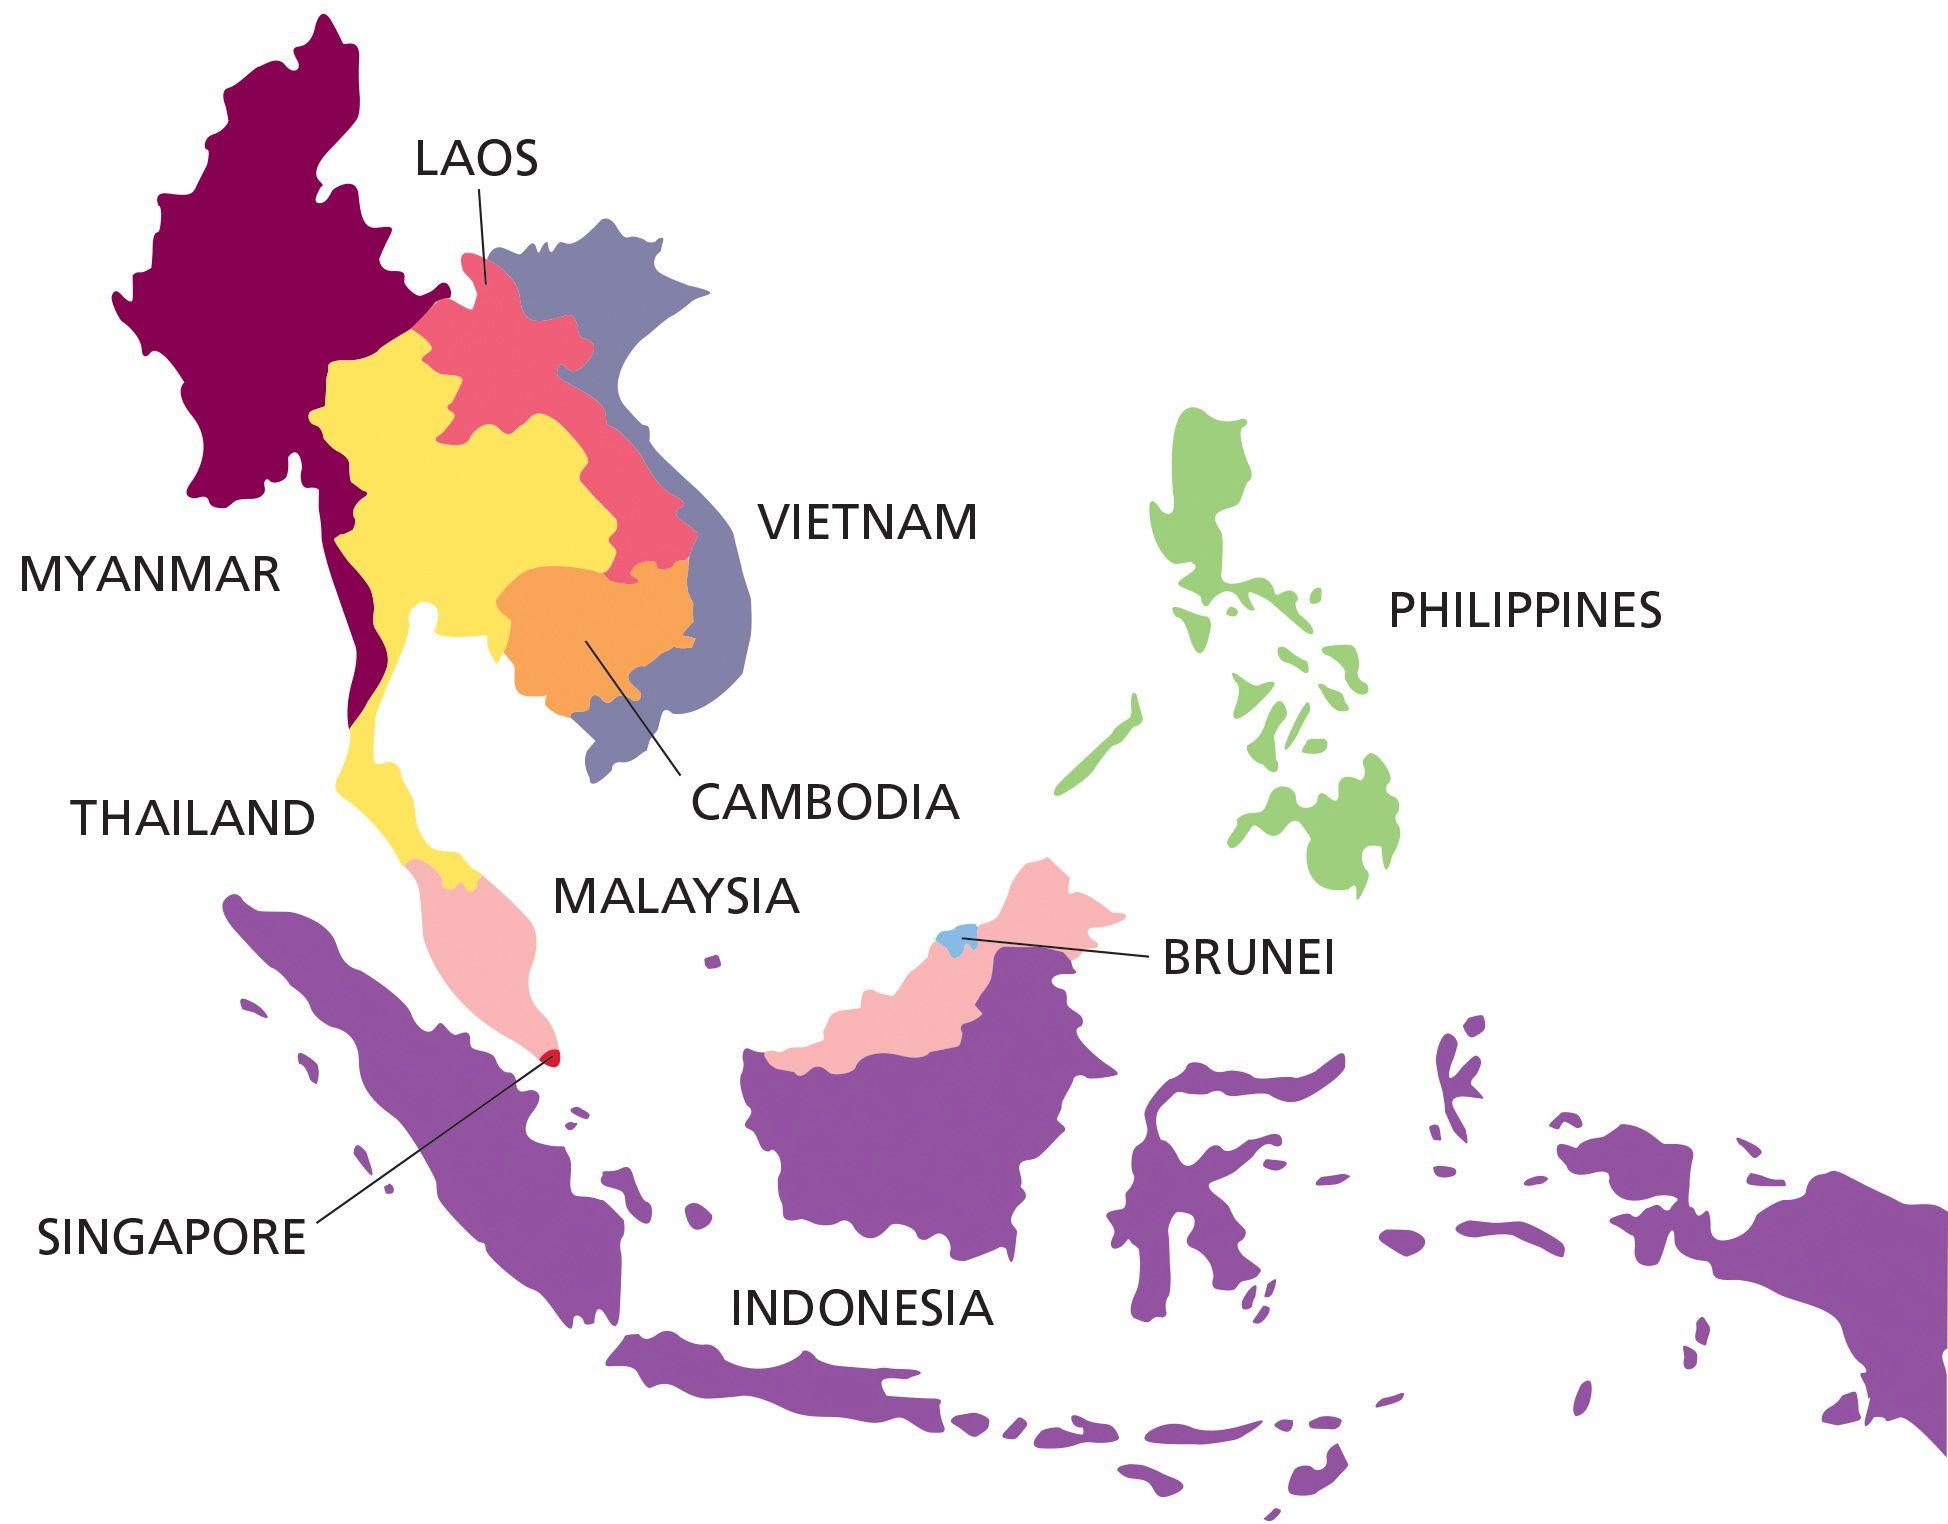 Юго восточная какие страны. Юго-Восточная Азия на карте. Государства Юго Восточной Азии на карте. Ассоциация государств Юго-Восточной Азии на карте. Юновосточгая Азия карта.